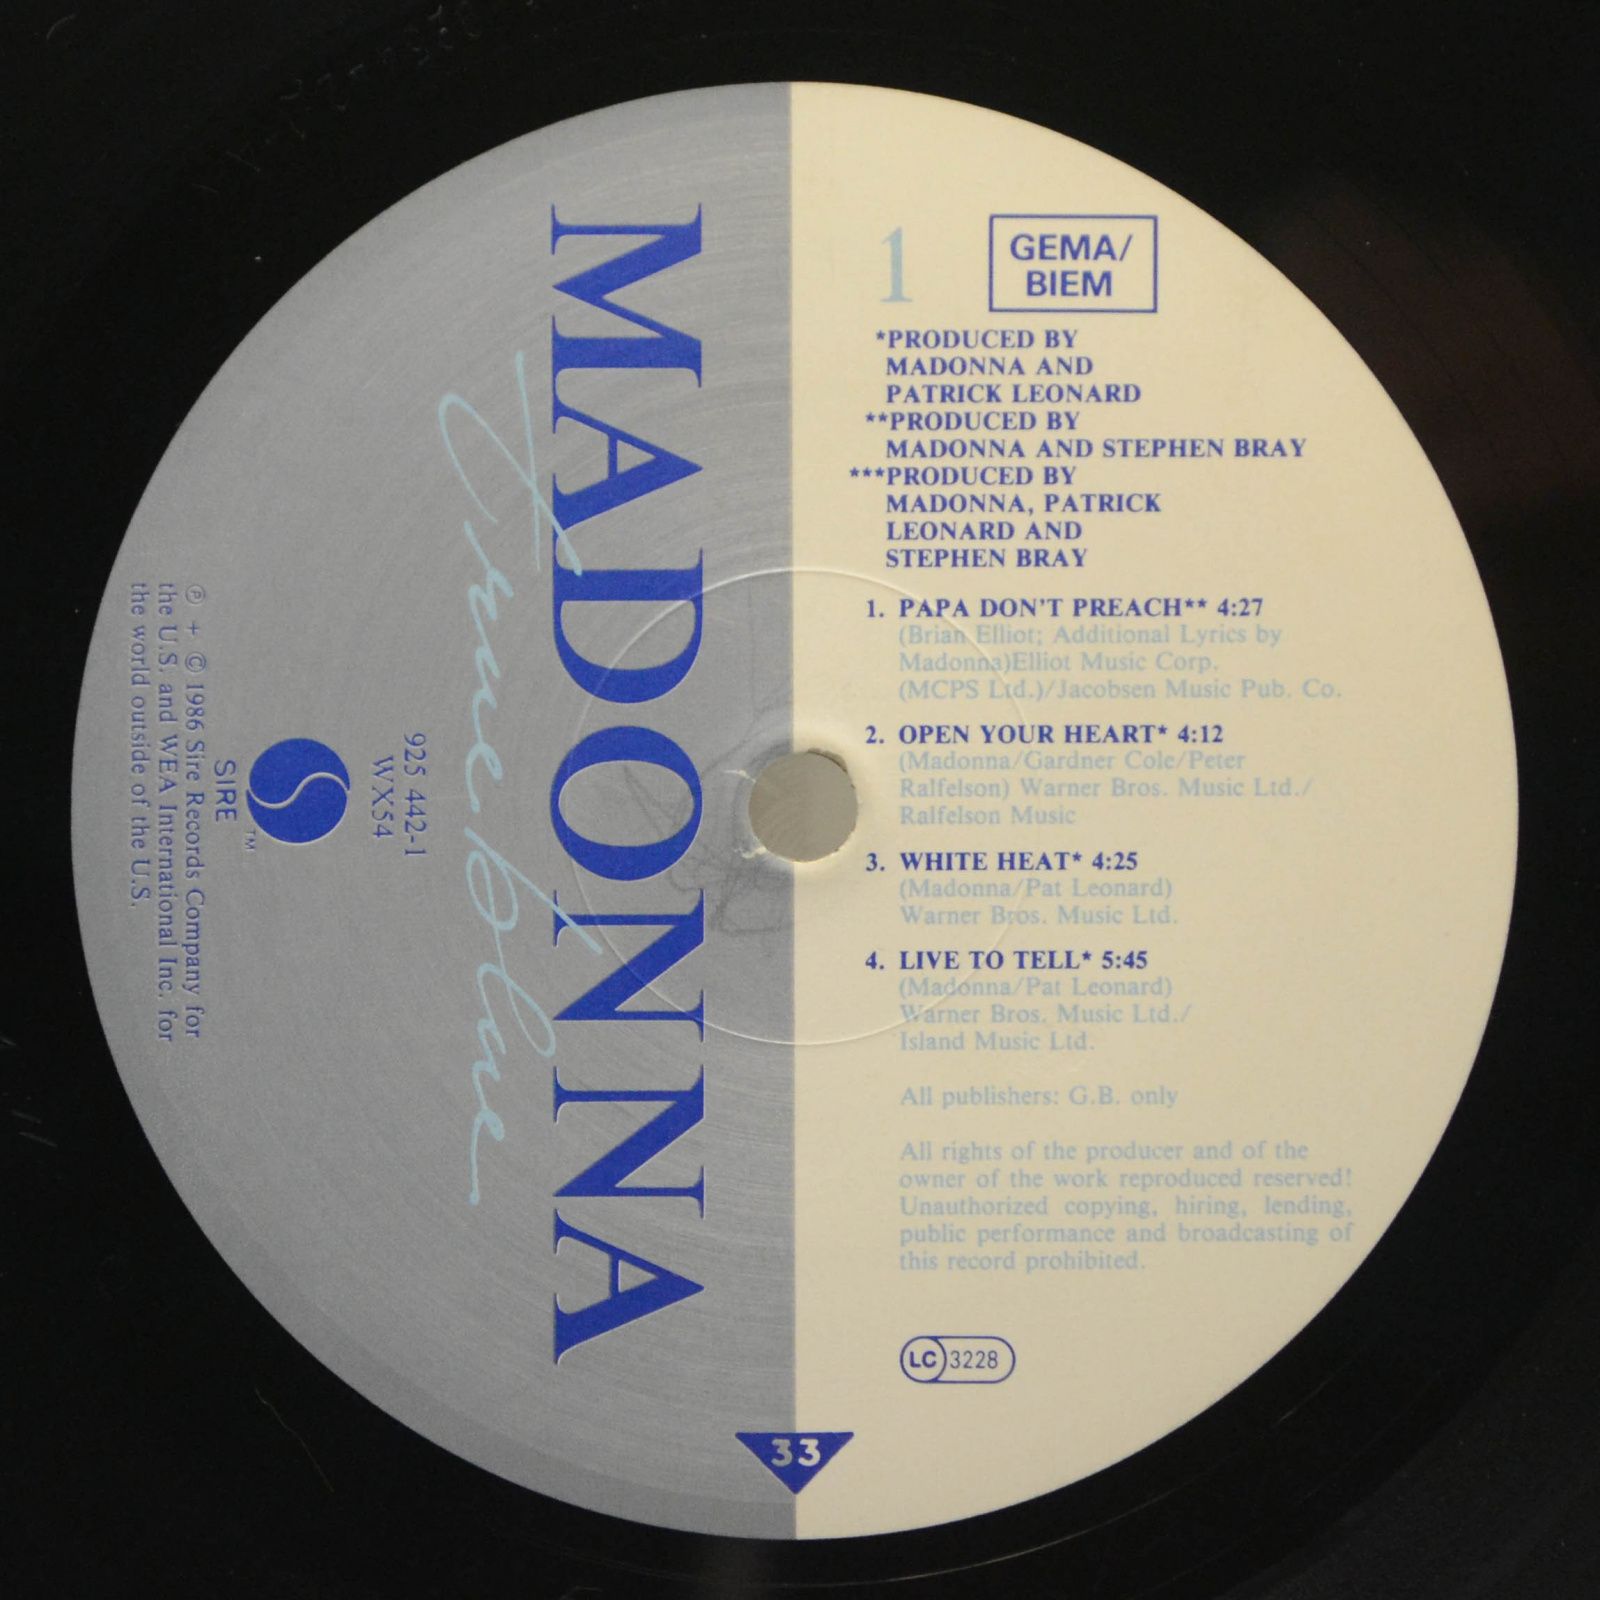 Madonna — True Blue, 1986